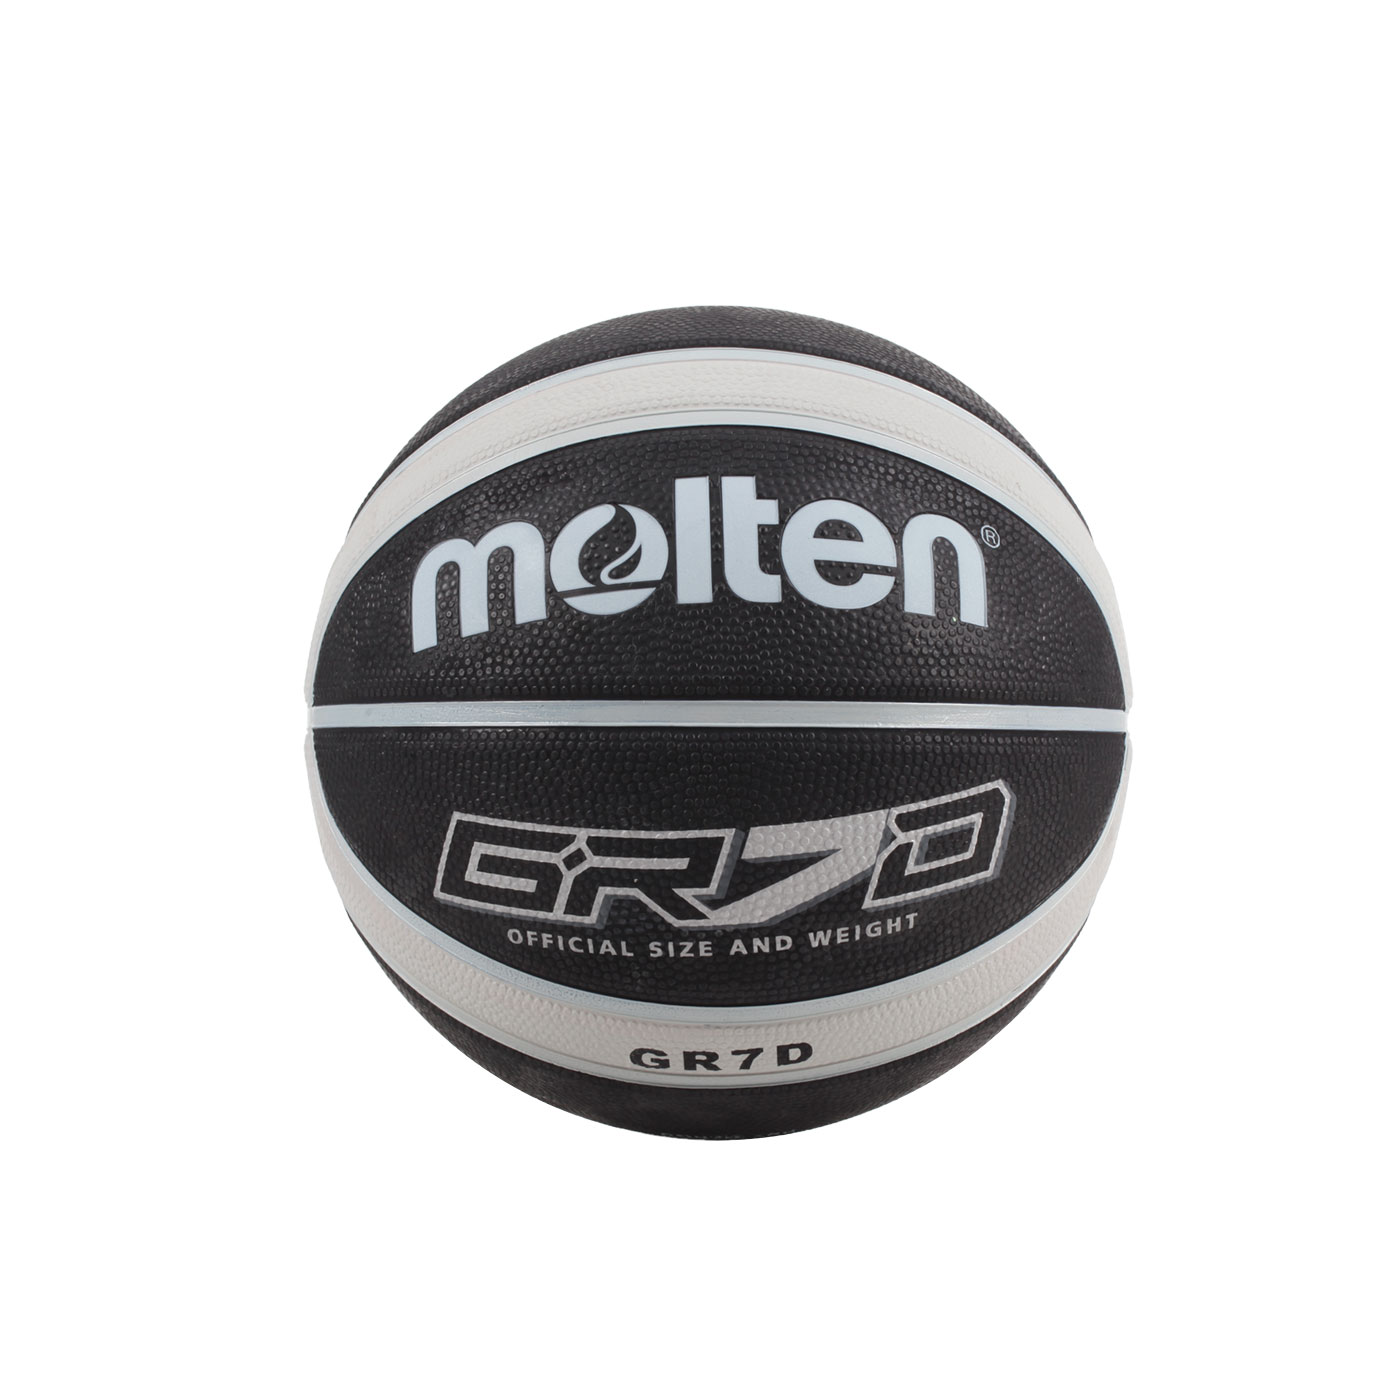 Molten 12片橡膠深溝籃球 BGR7D - 黑灰